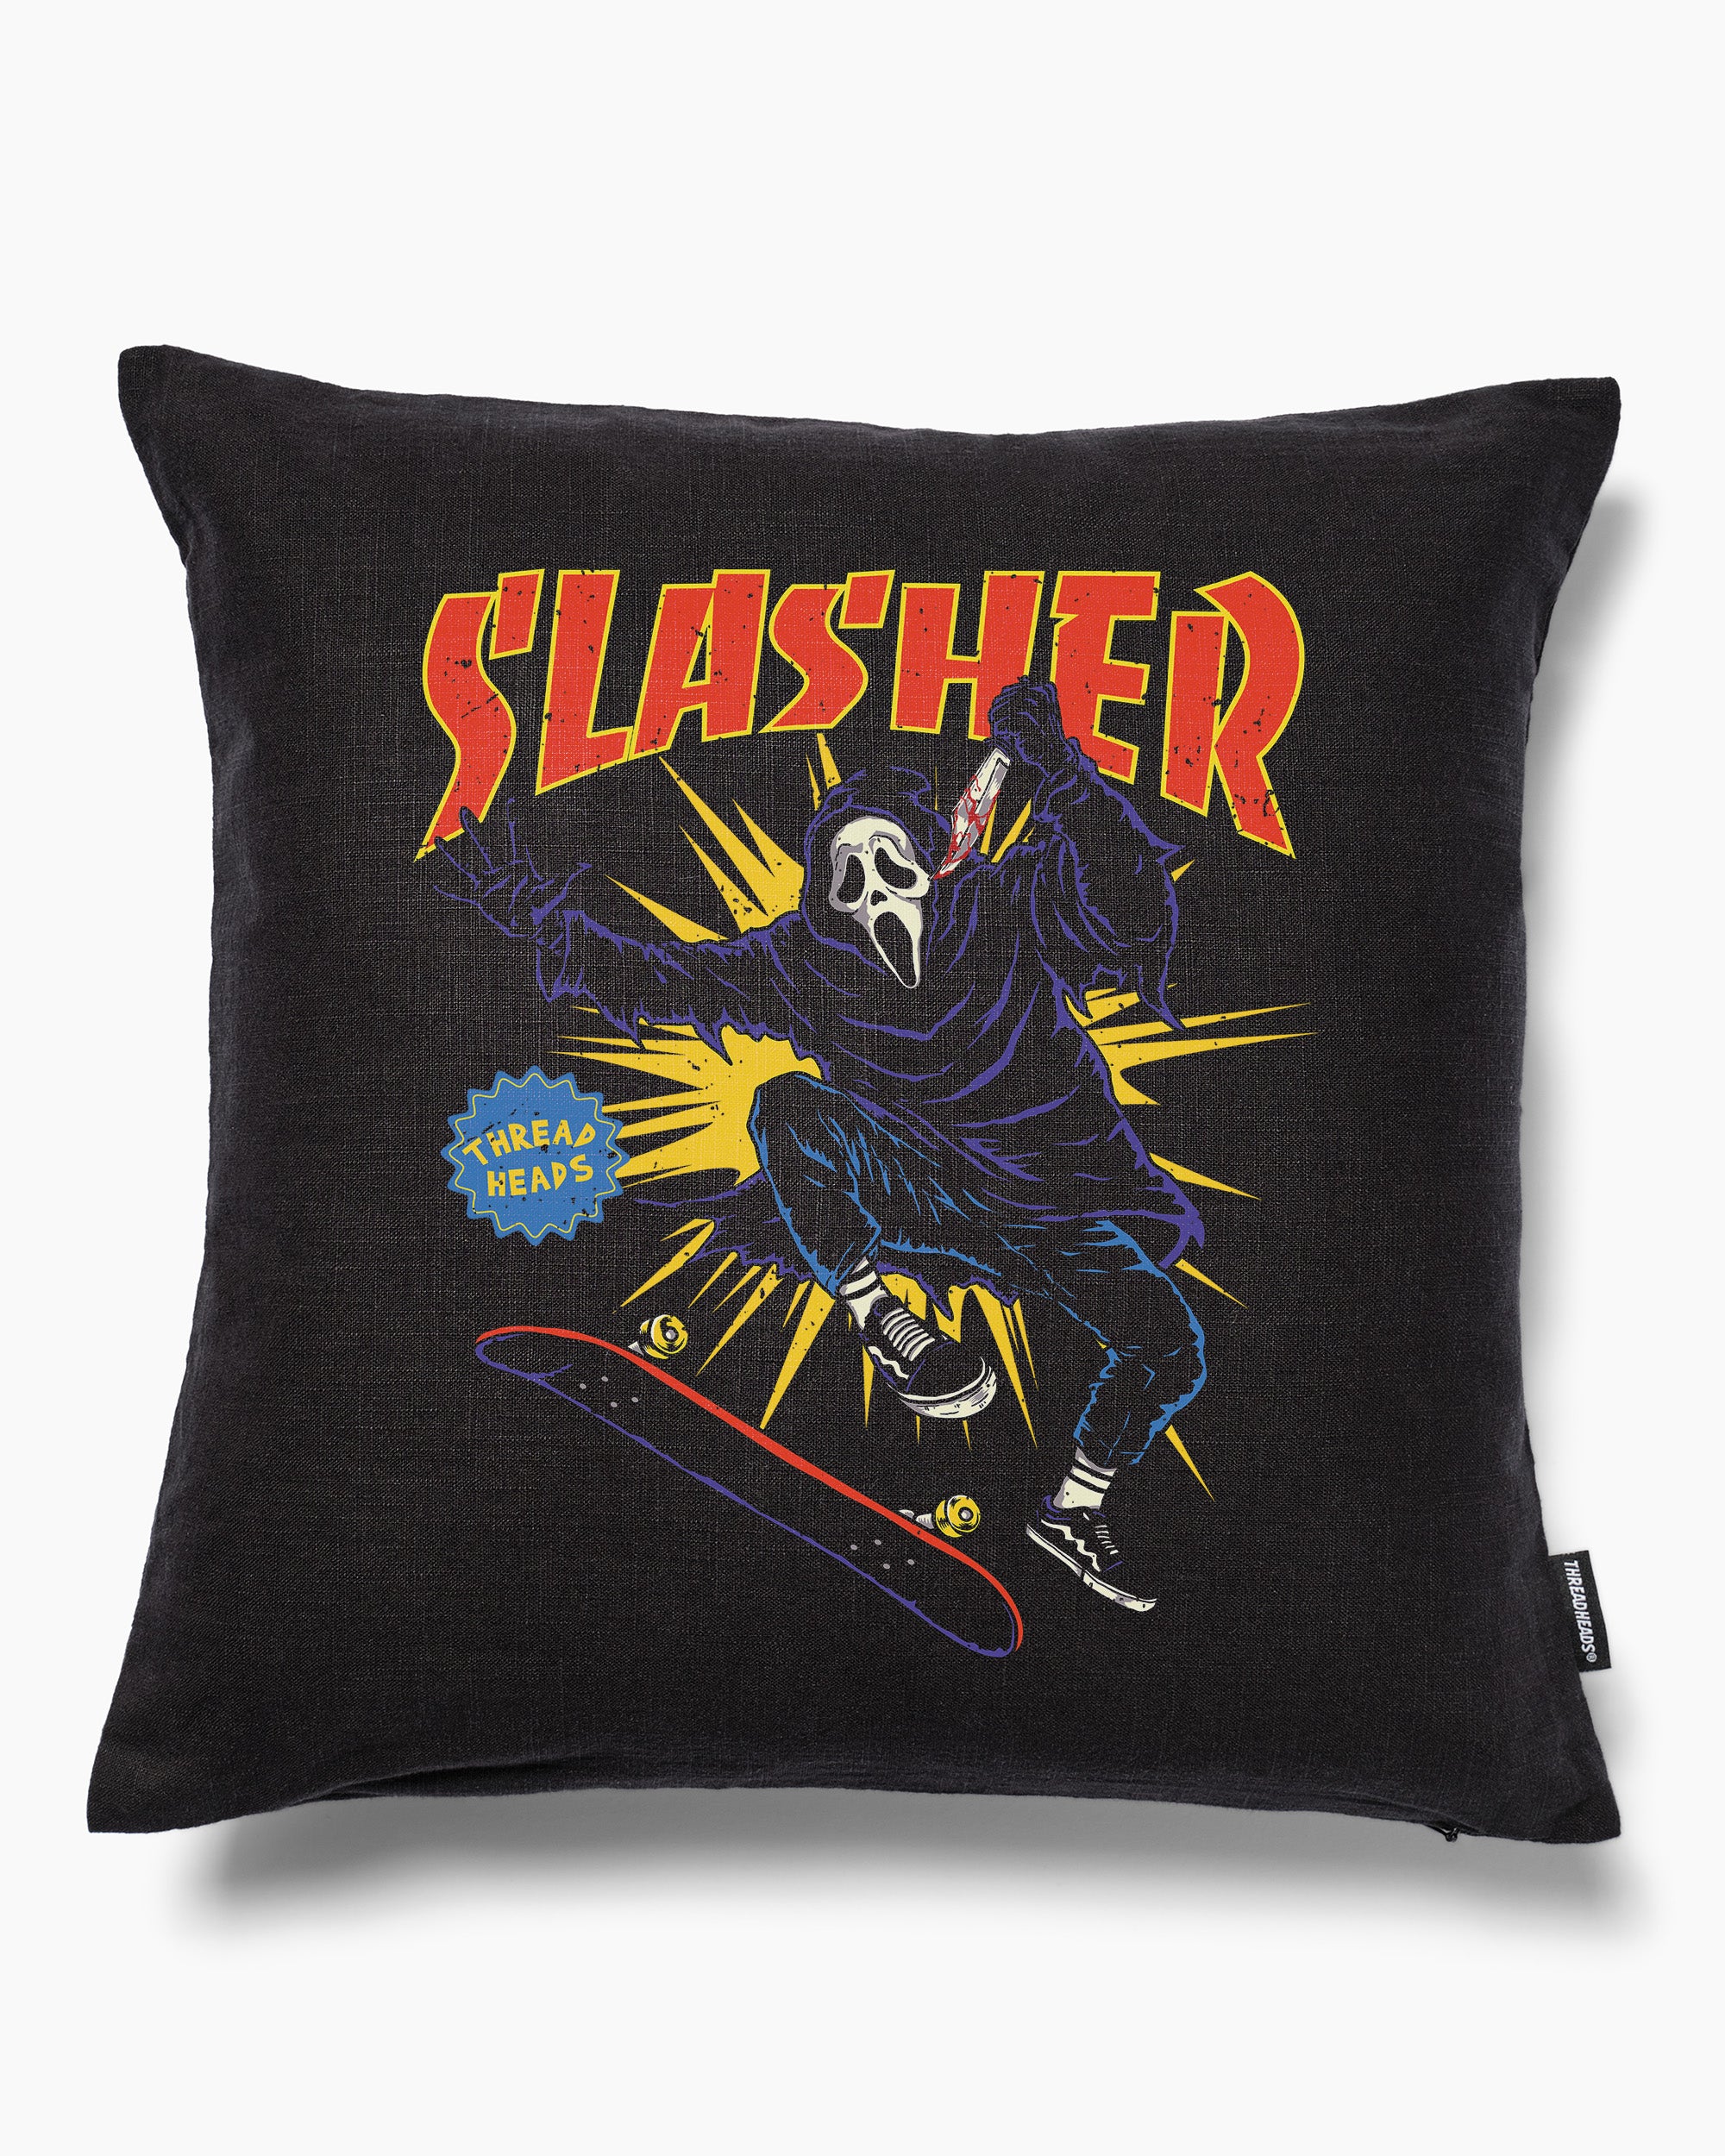 Slasher Cushion